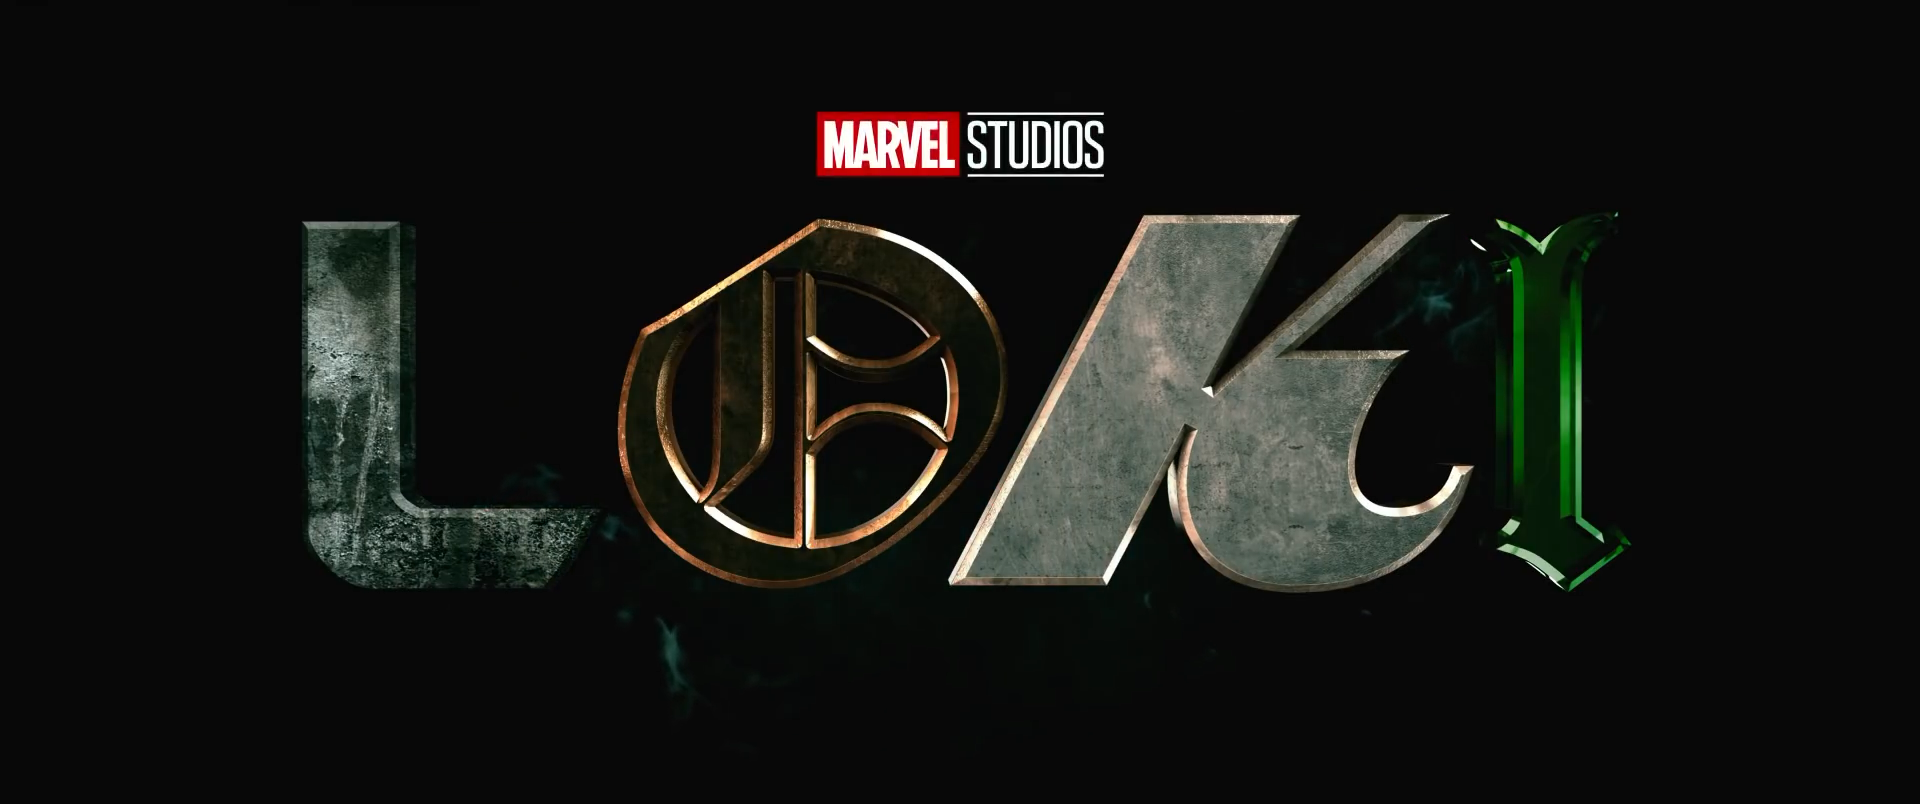 Loki Season 2: Blindspotting’s Rafael Casal Joins Second Season of Hit Marvel Show